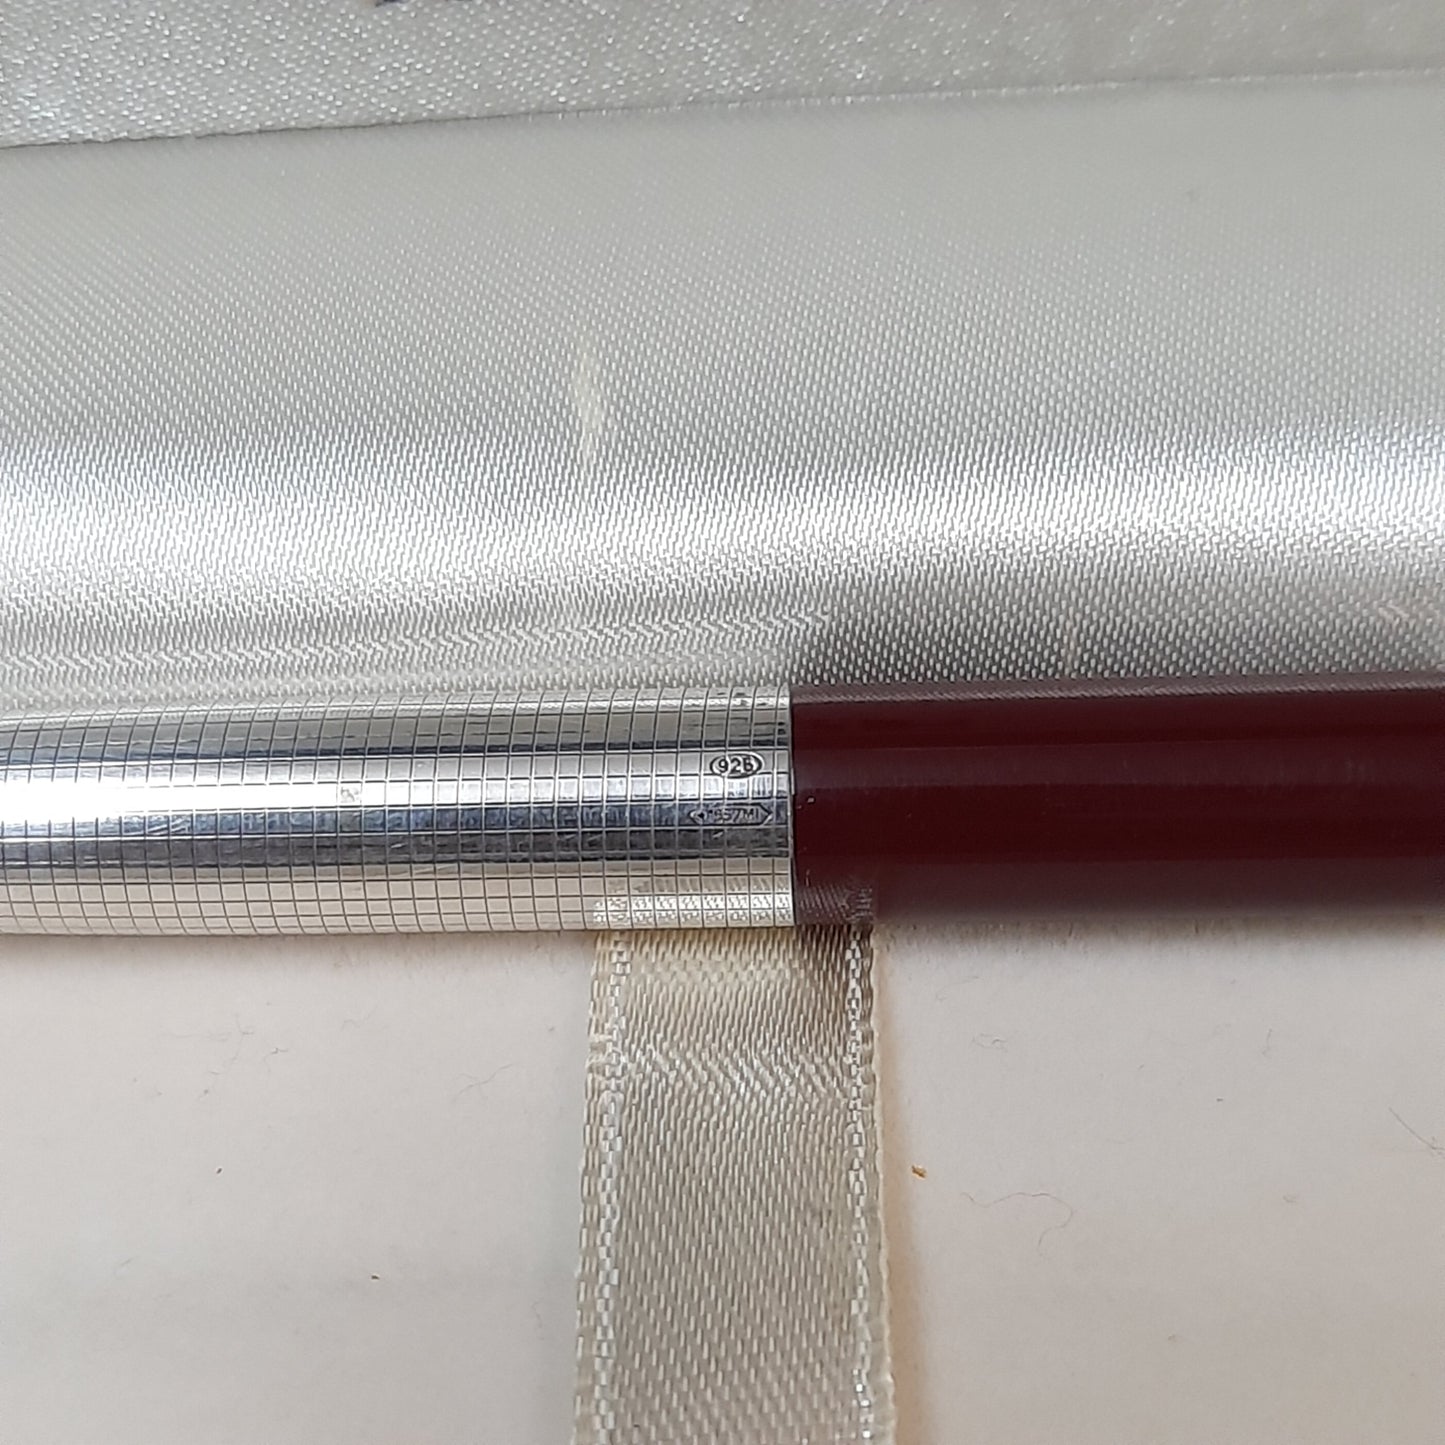 Franklin-Christoph 925 Sterling Silver Model 07 Dara Maroon Ball Pen